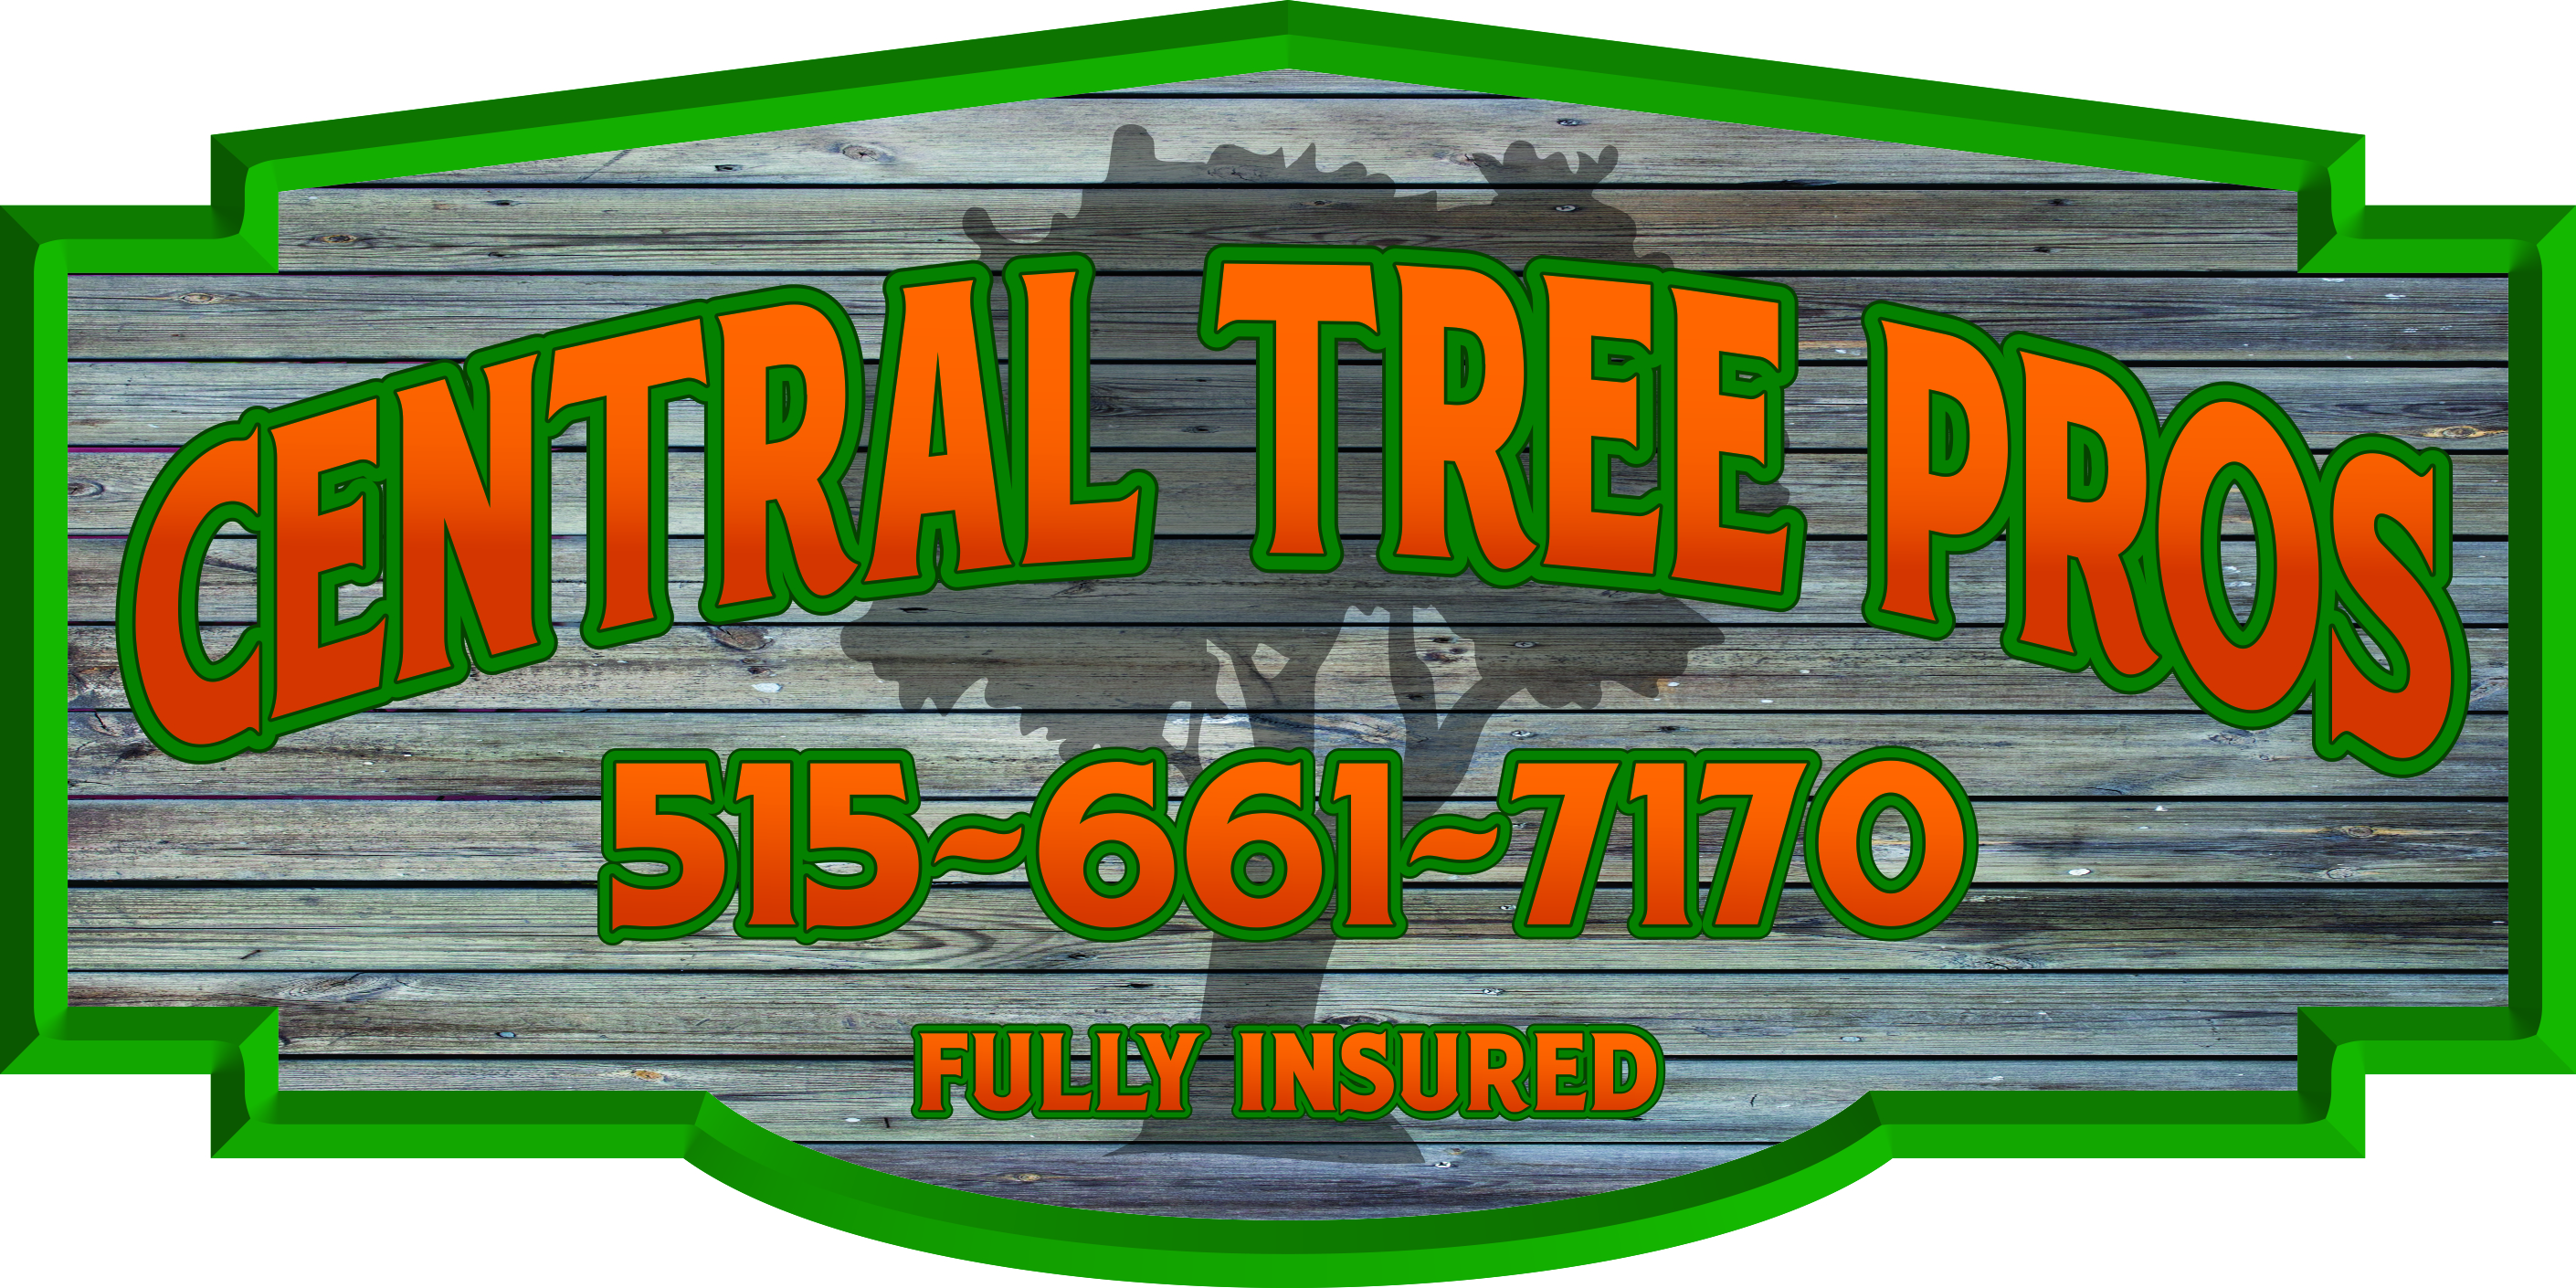 Central Tree Pros Logo